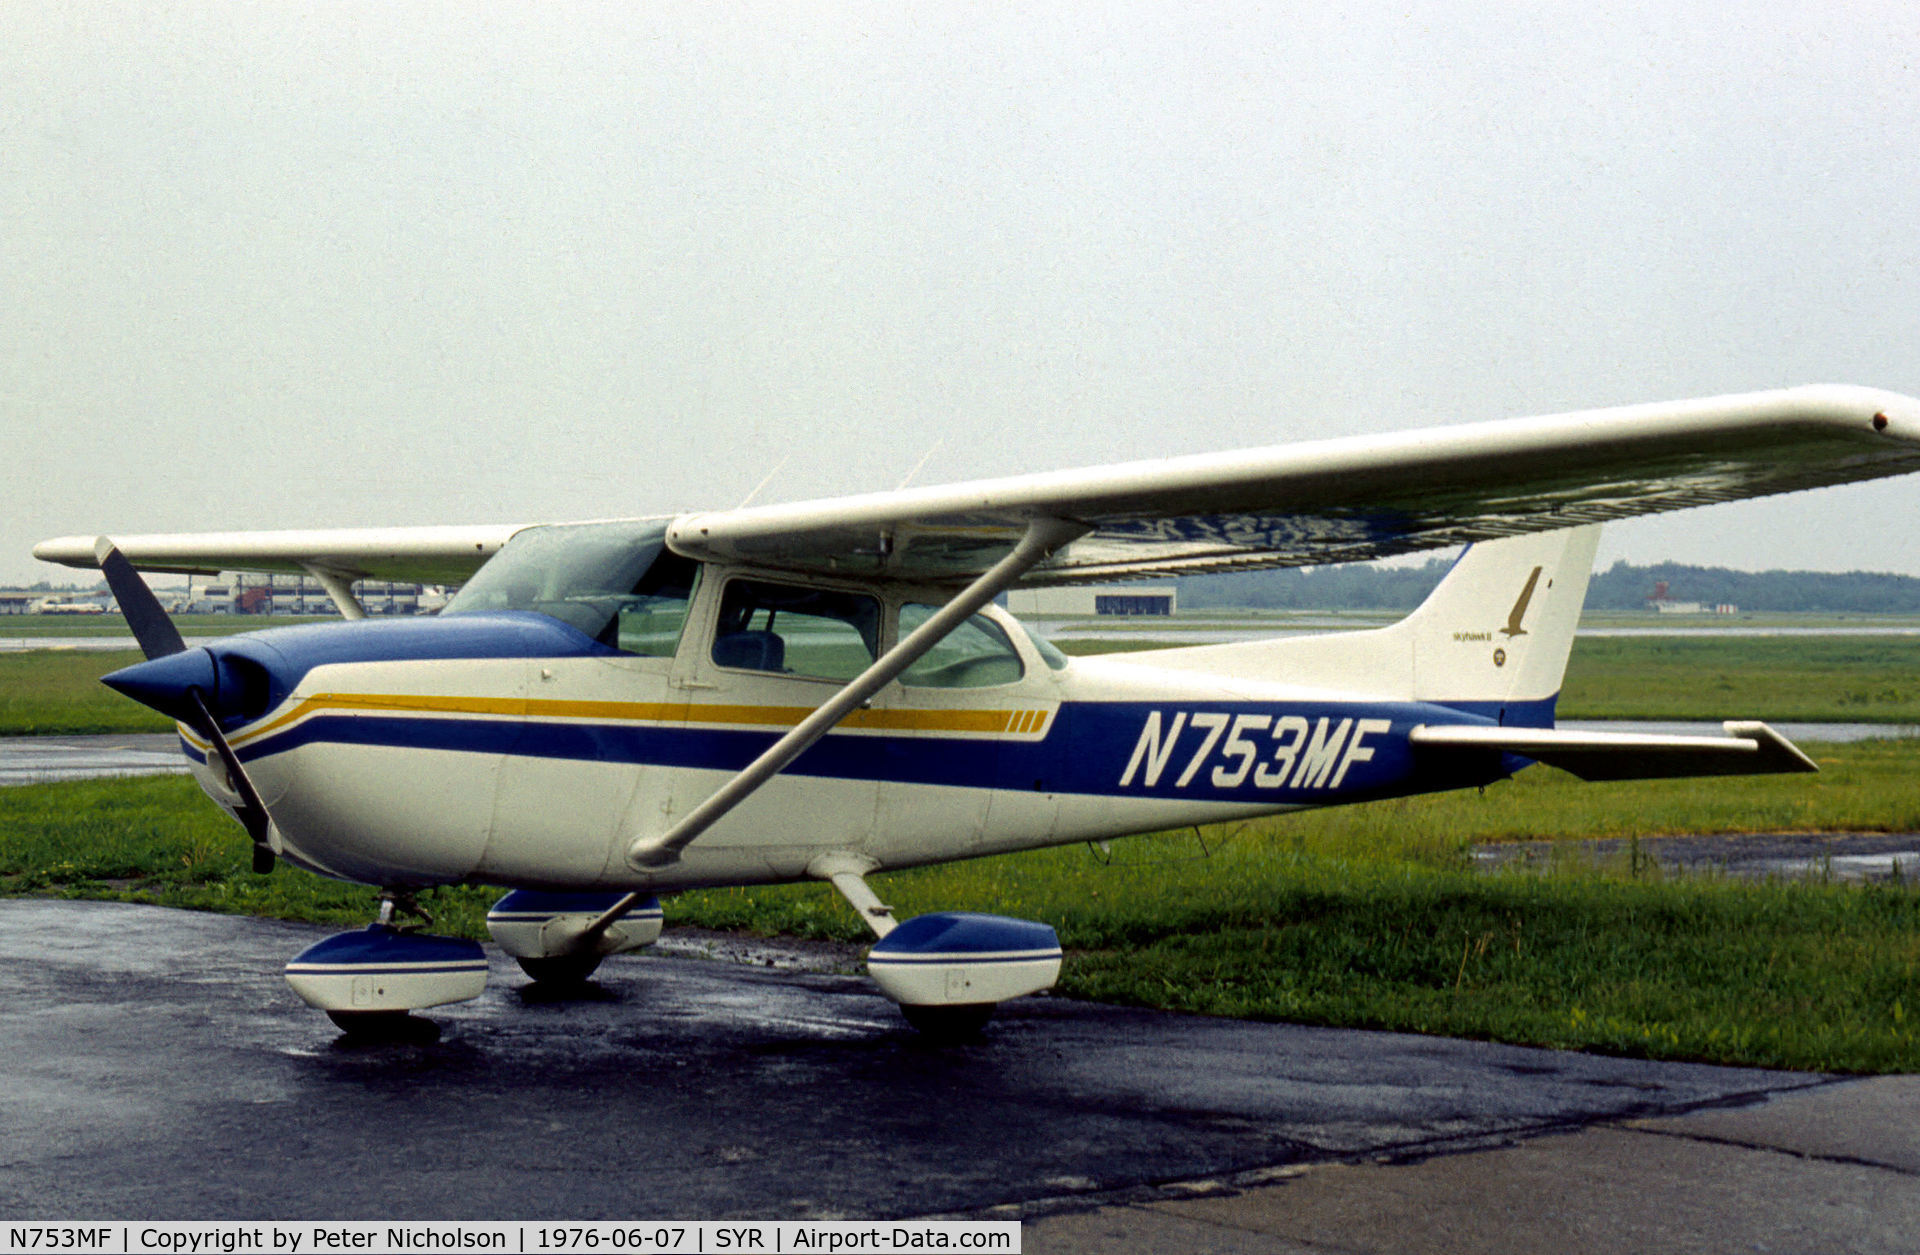 N753MF, 1974 Cessna 172M C/N 172-64109, Cessna 172M Skyhawk seen at Syracuse in the Summer of 1976.